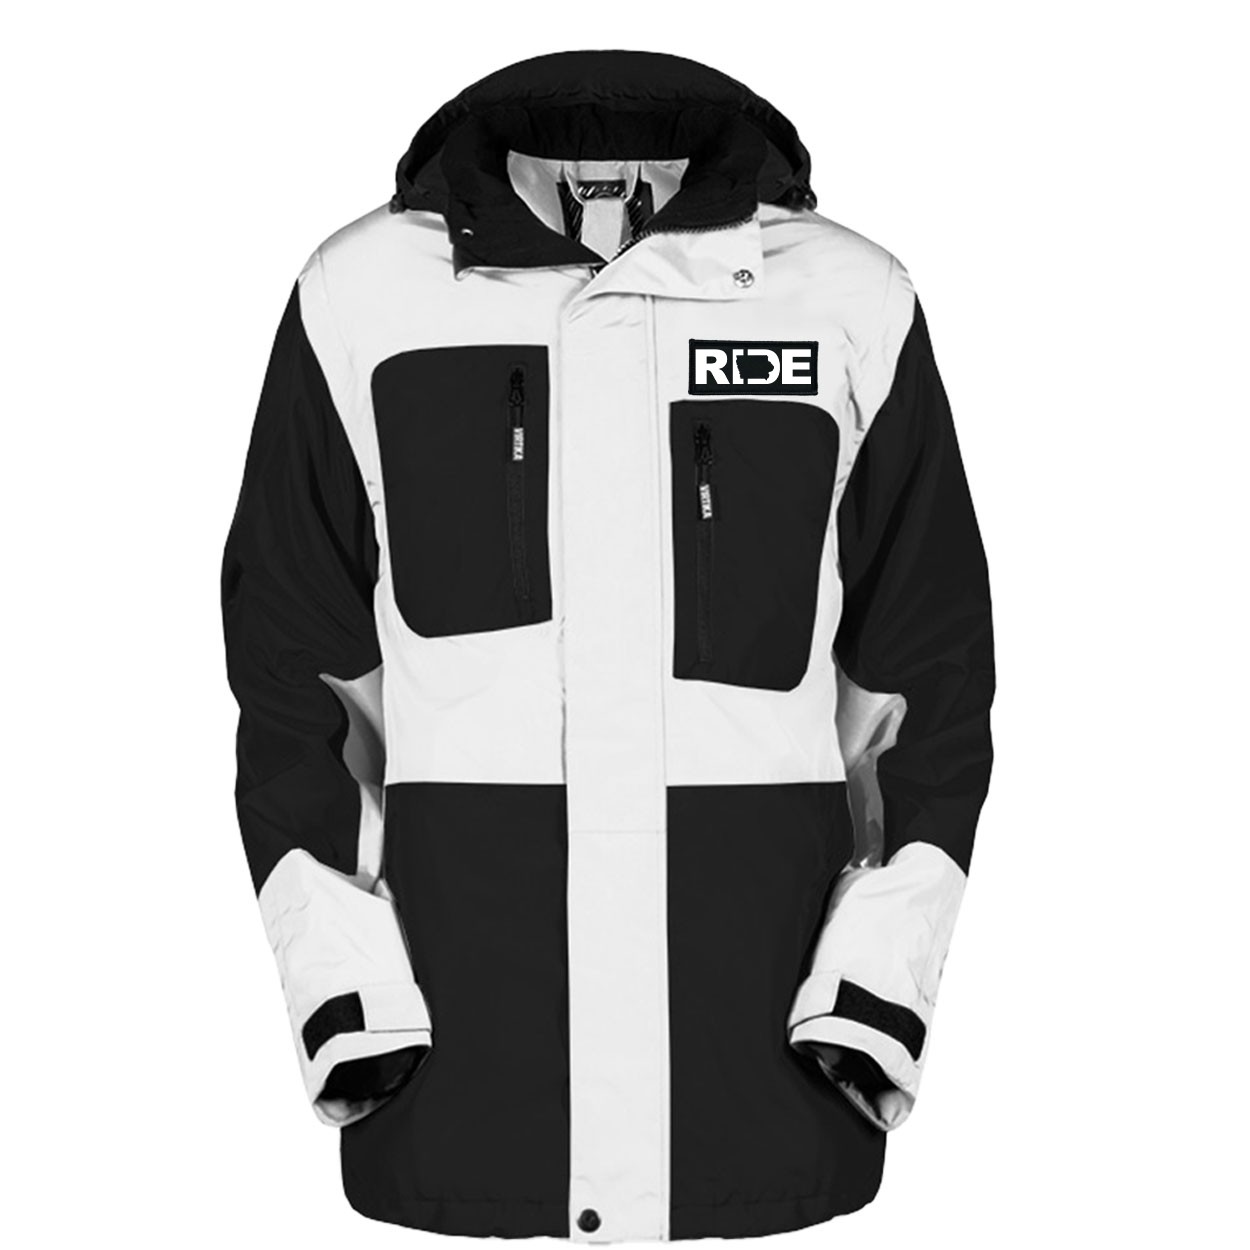 Ride Iowa Pro Waterproof Breathable Winter Virtika Jacket Black/White (White Logo)